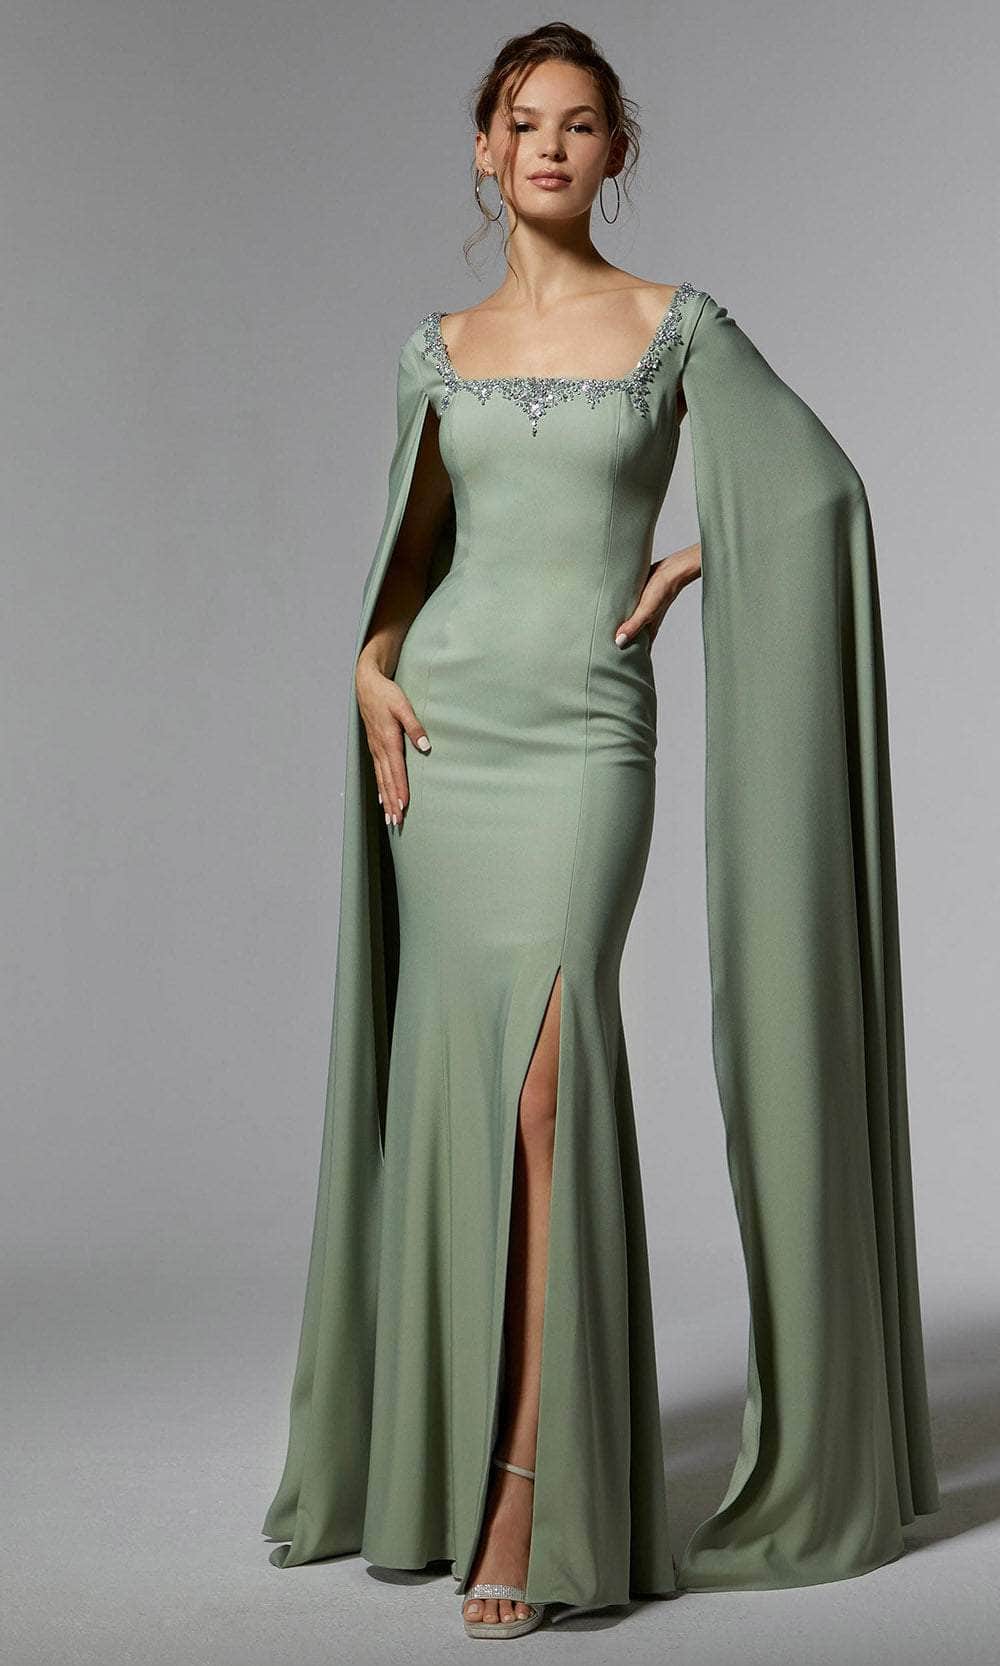 MGNY by Mori Lee 72915 - Crystal Beaded Sleeve Evening Dress Prom Dress